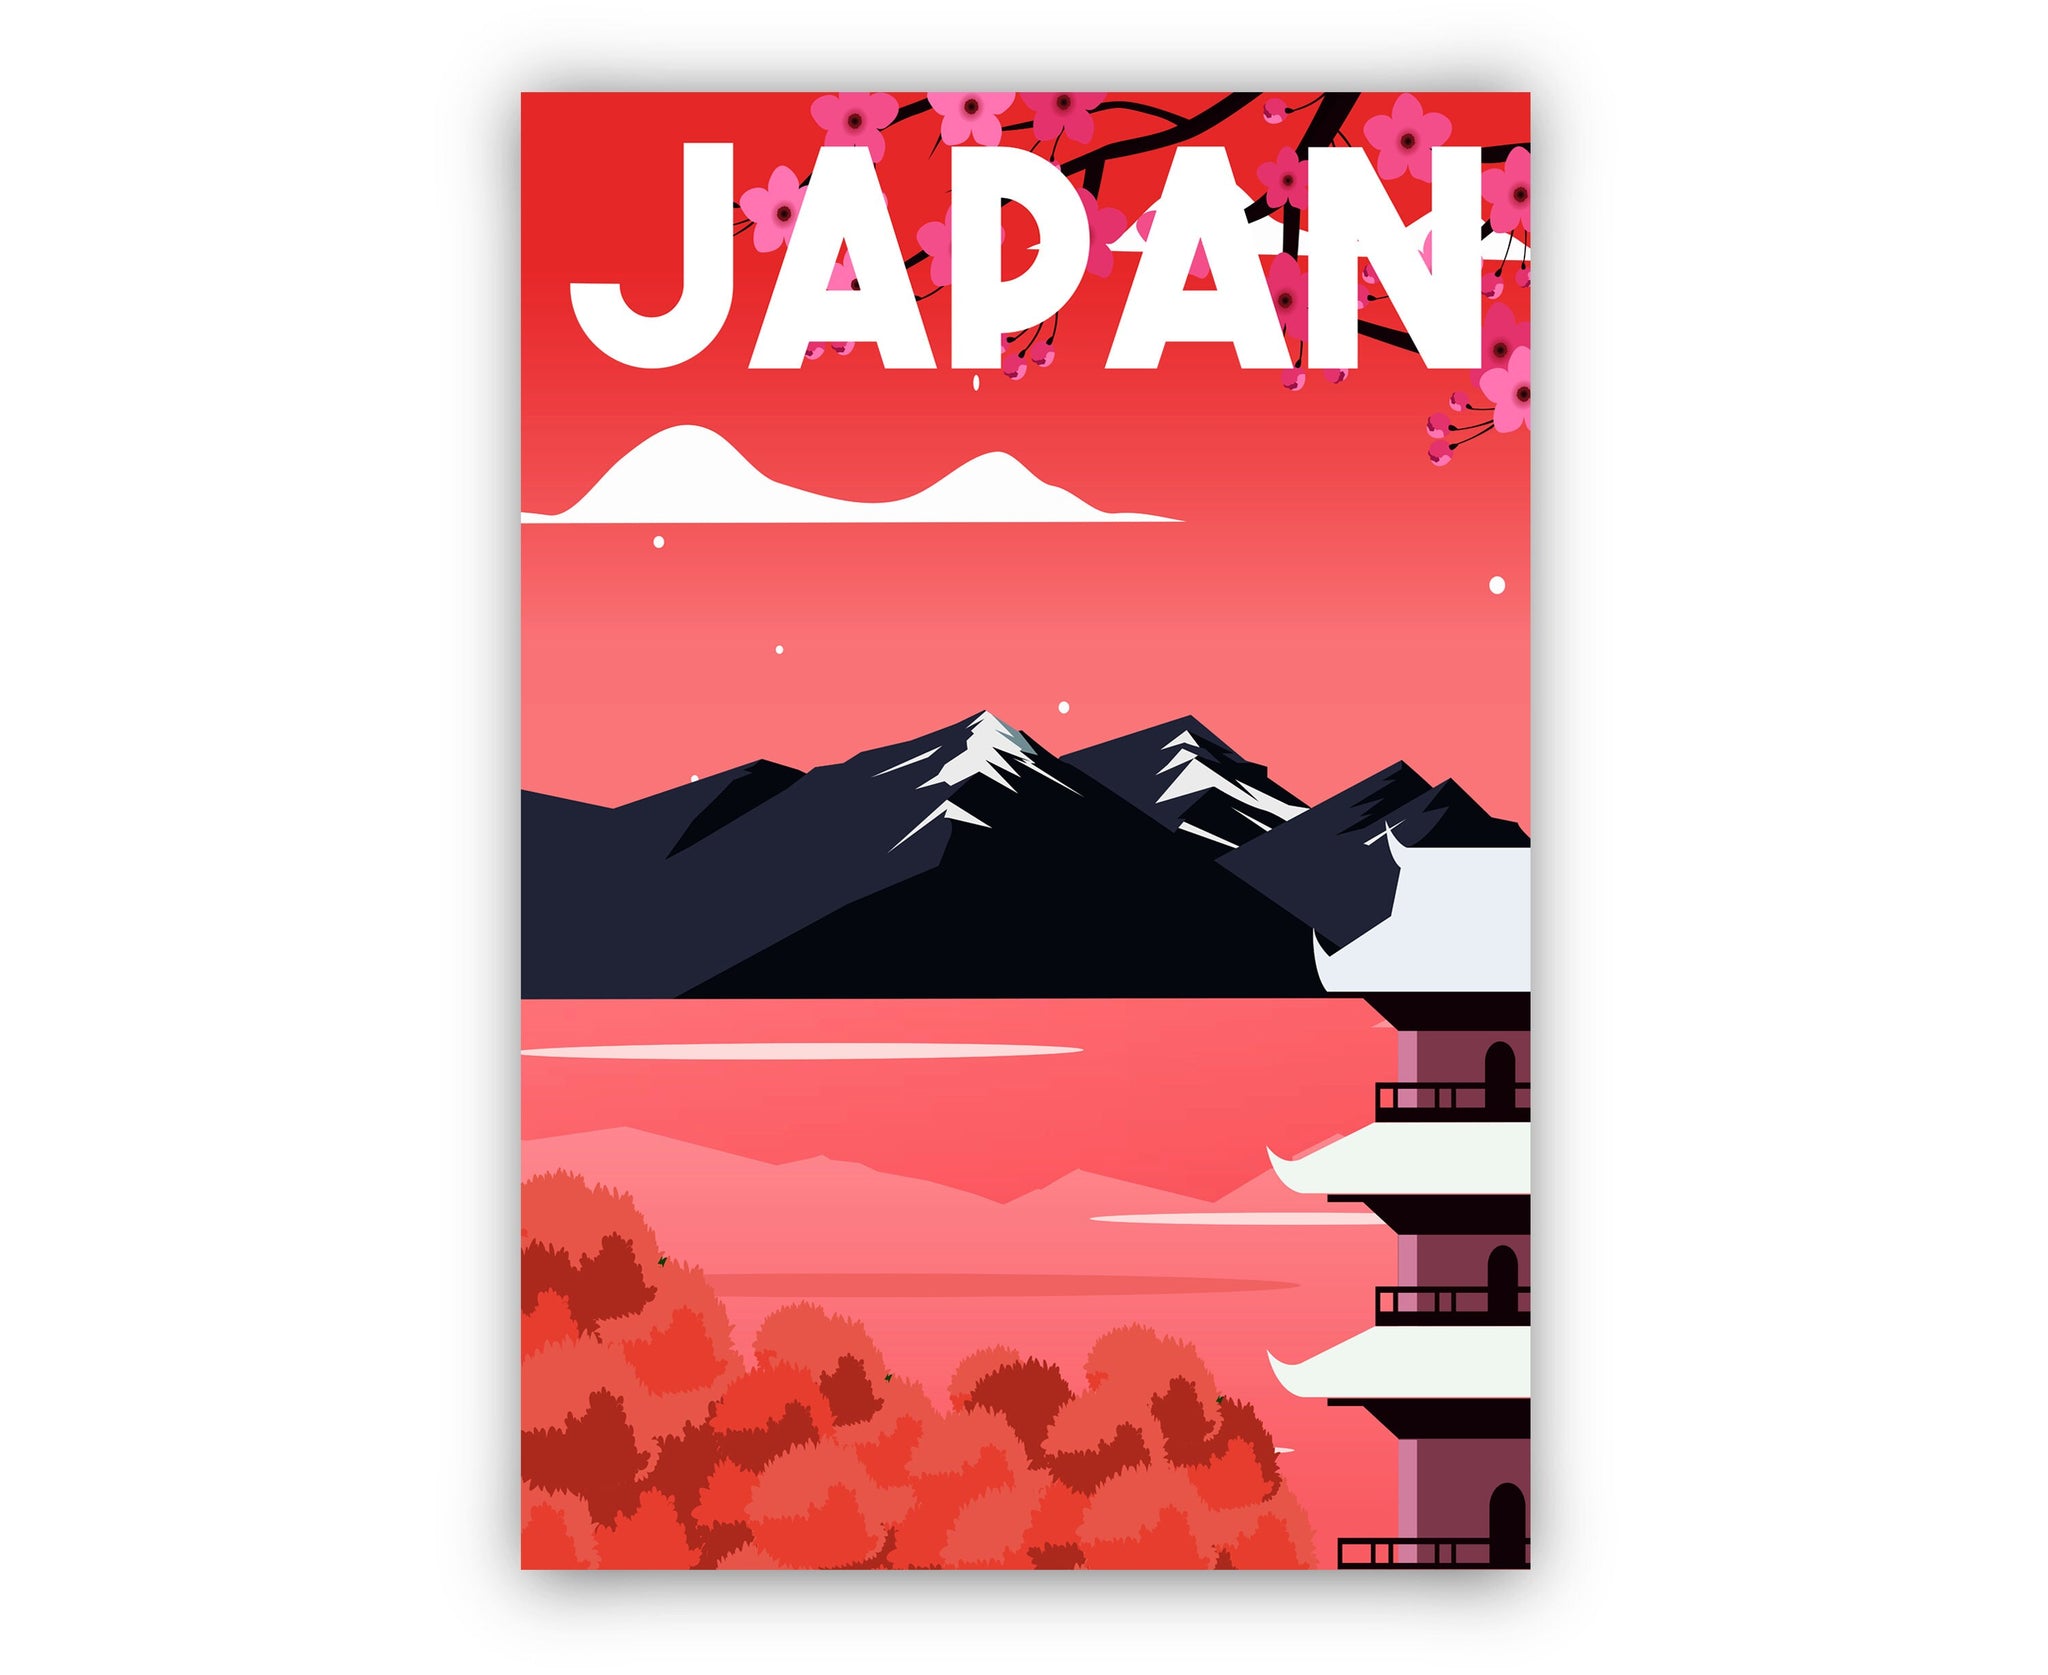 JAPAN travel poster, Japan cityscape poster print, Japan landmark Poster wall art, Home wall art, Office wall decoration, Housewarming gift